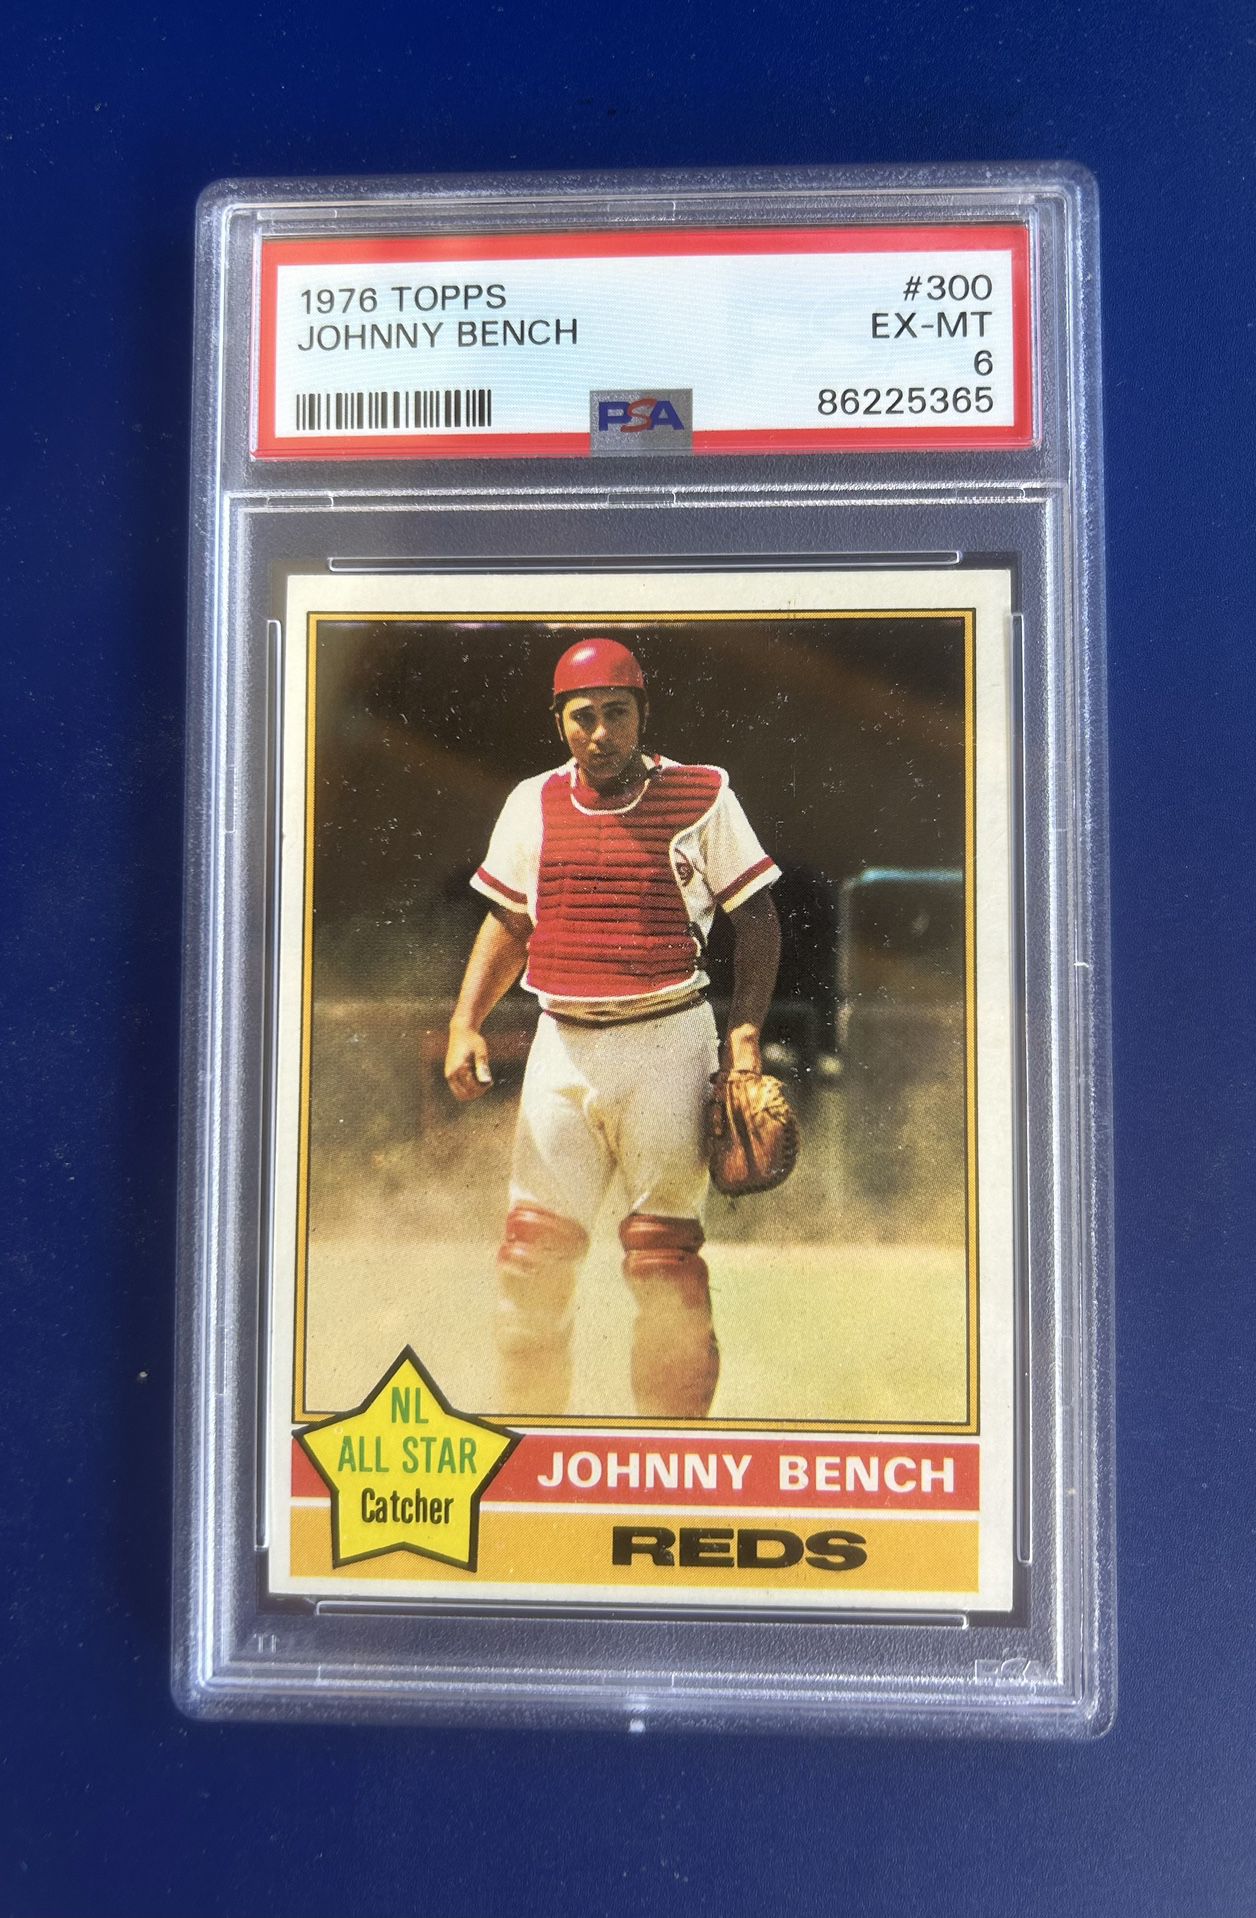 1976 Topps Johnny Bench Baseball Card Graded PSA 6